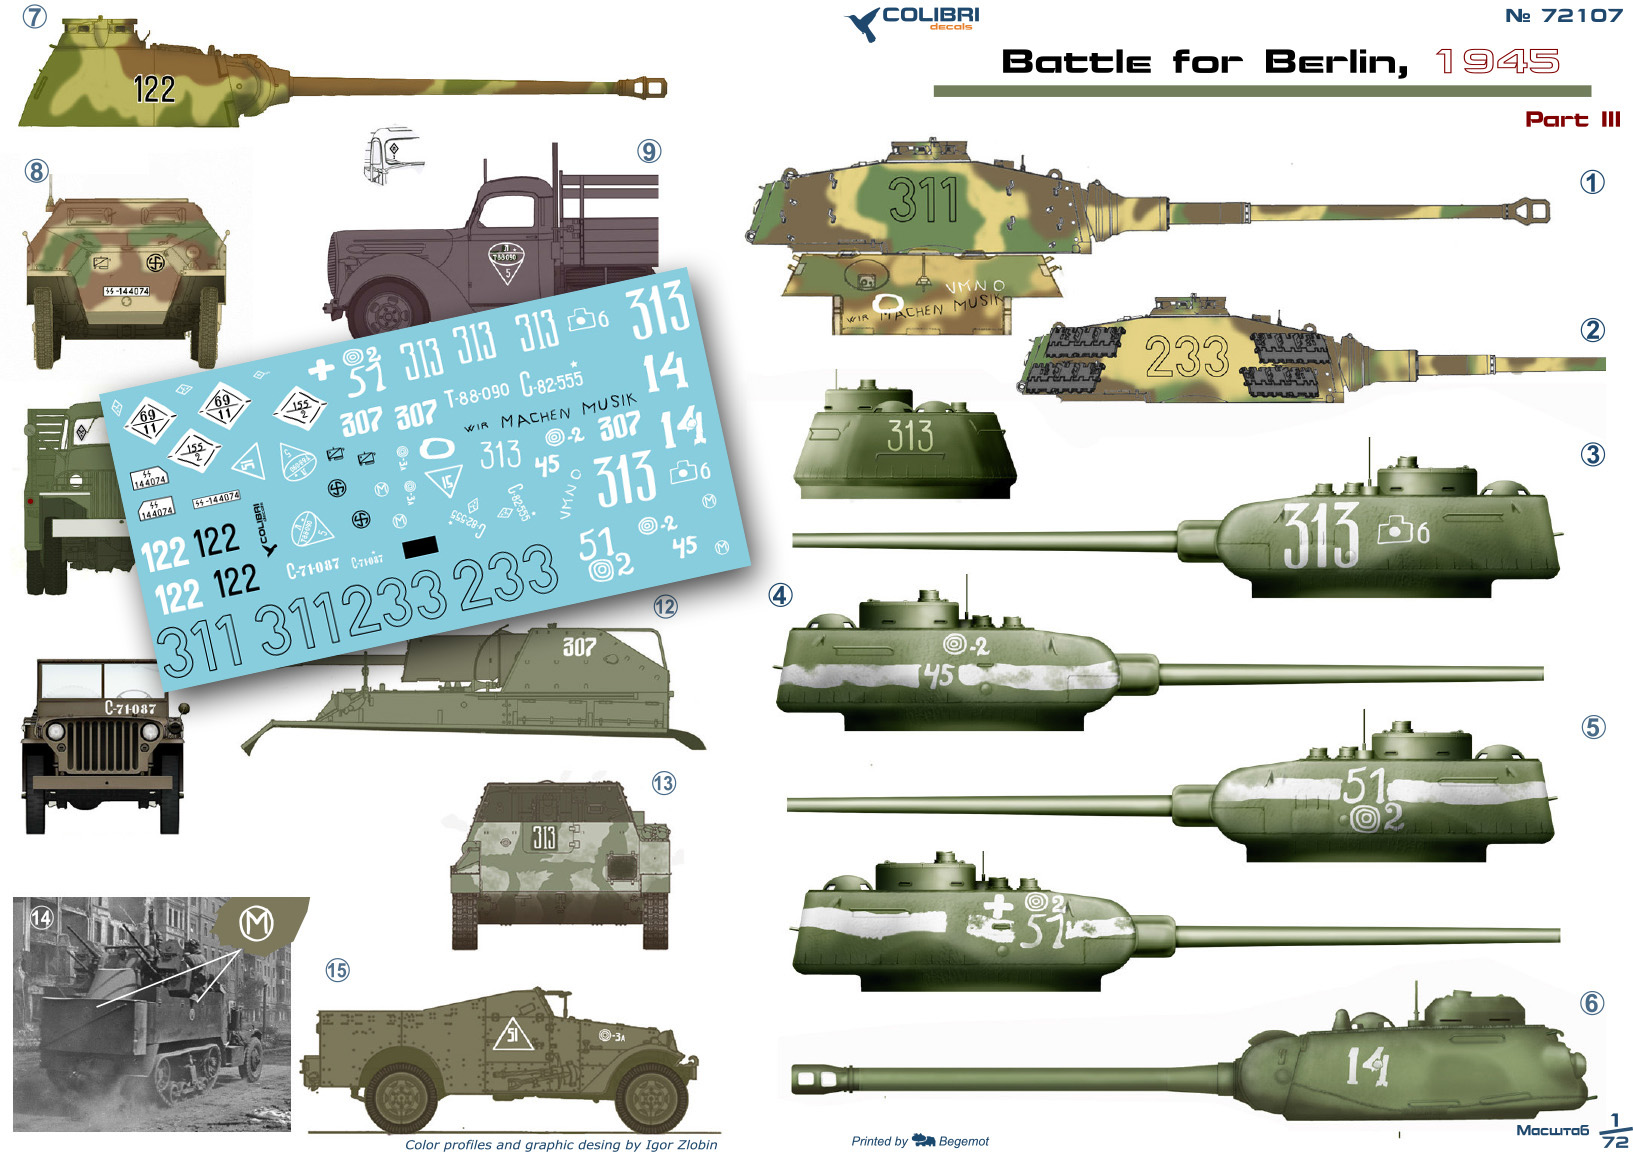 Decal 1/72 Battle for Berlin 45 - Part III (Colibri Decals)